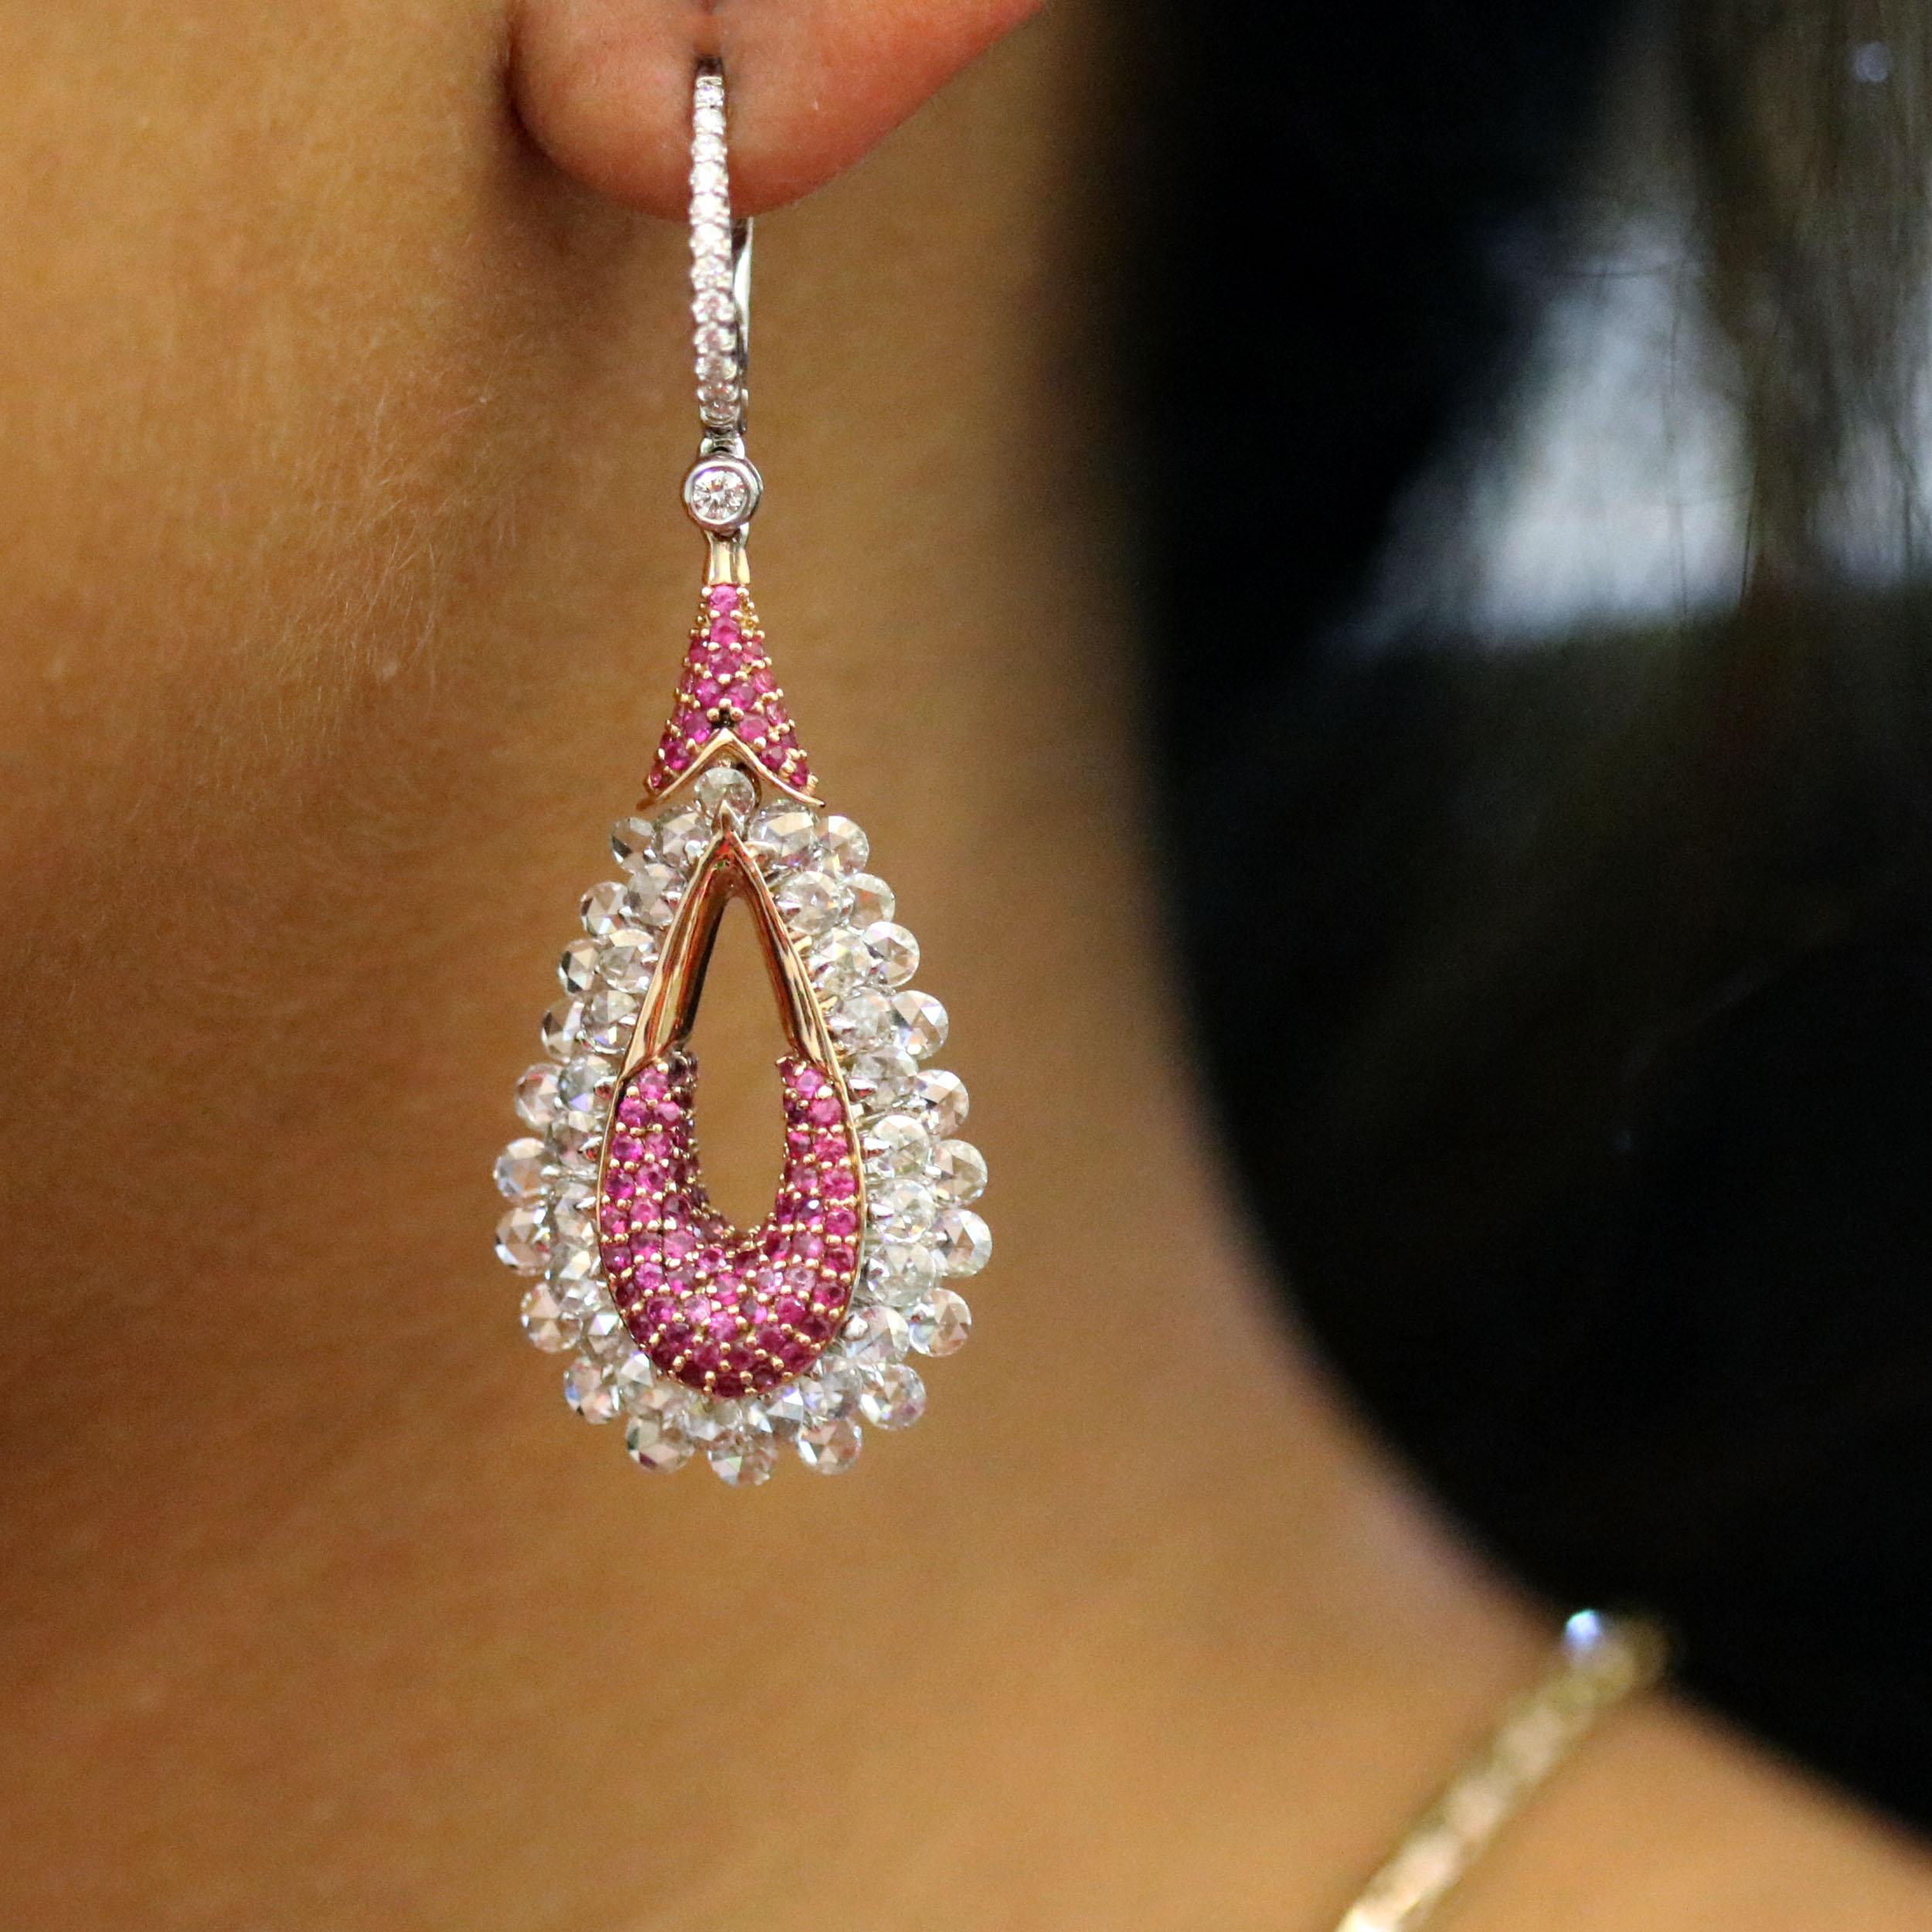 Women's Studio Rêves 18K Gold, Rose cut Diamond and Pink Sapphire Dangling Earrings